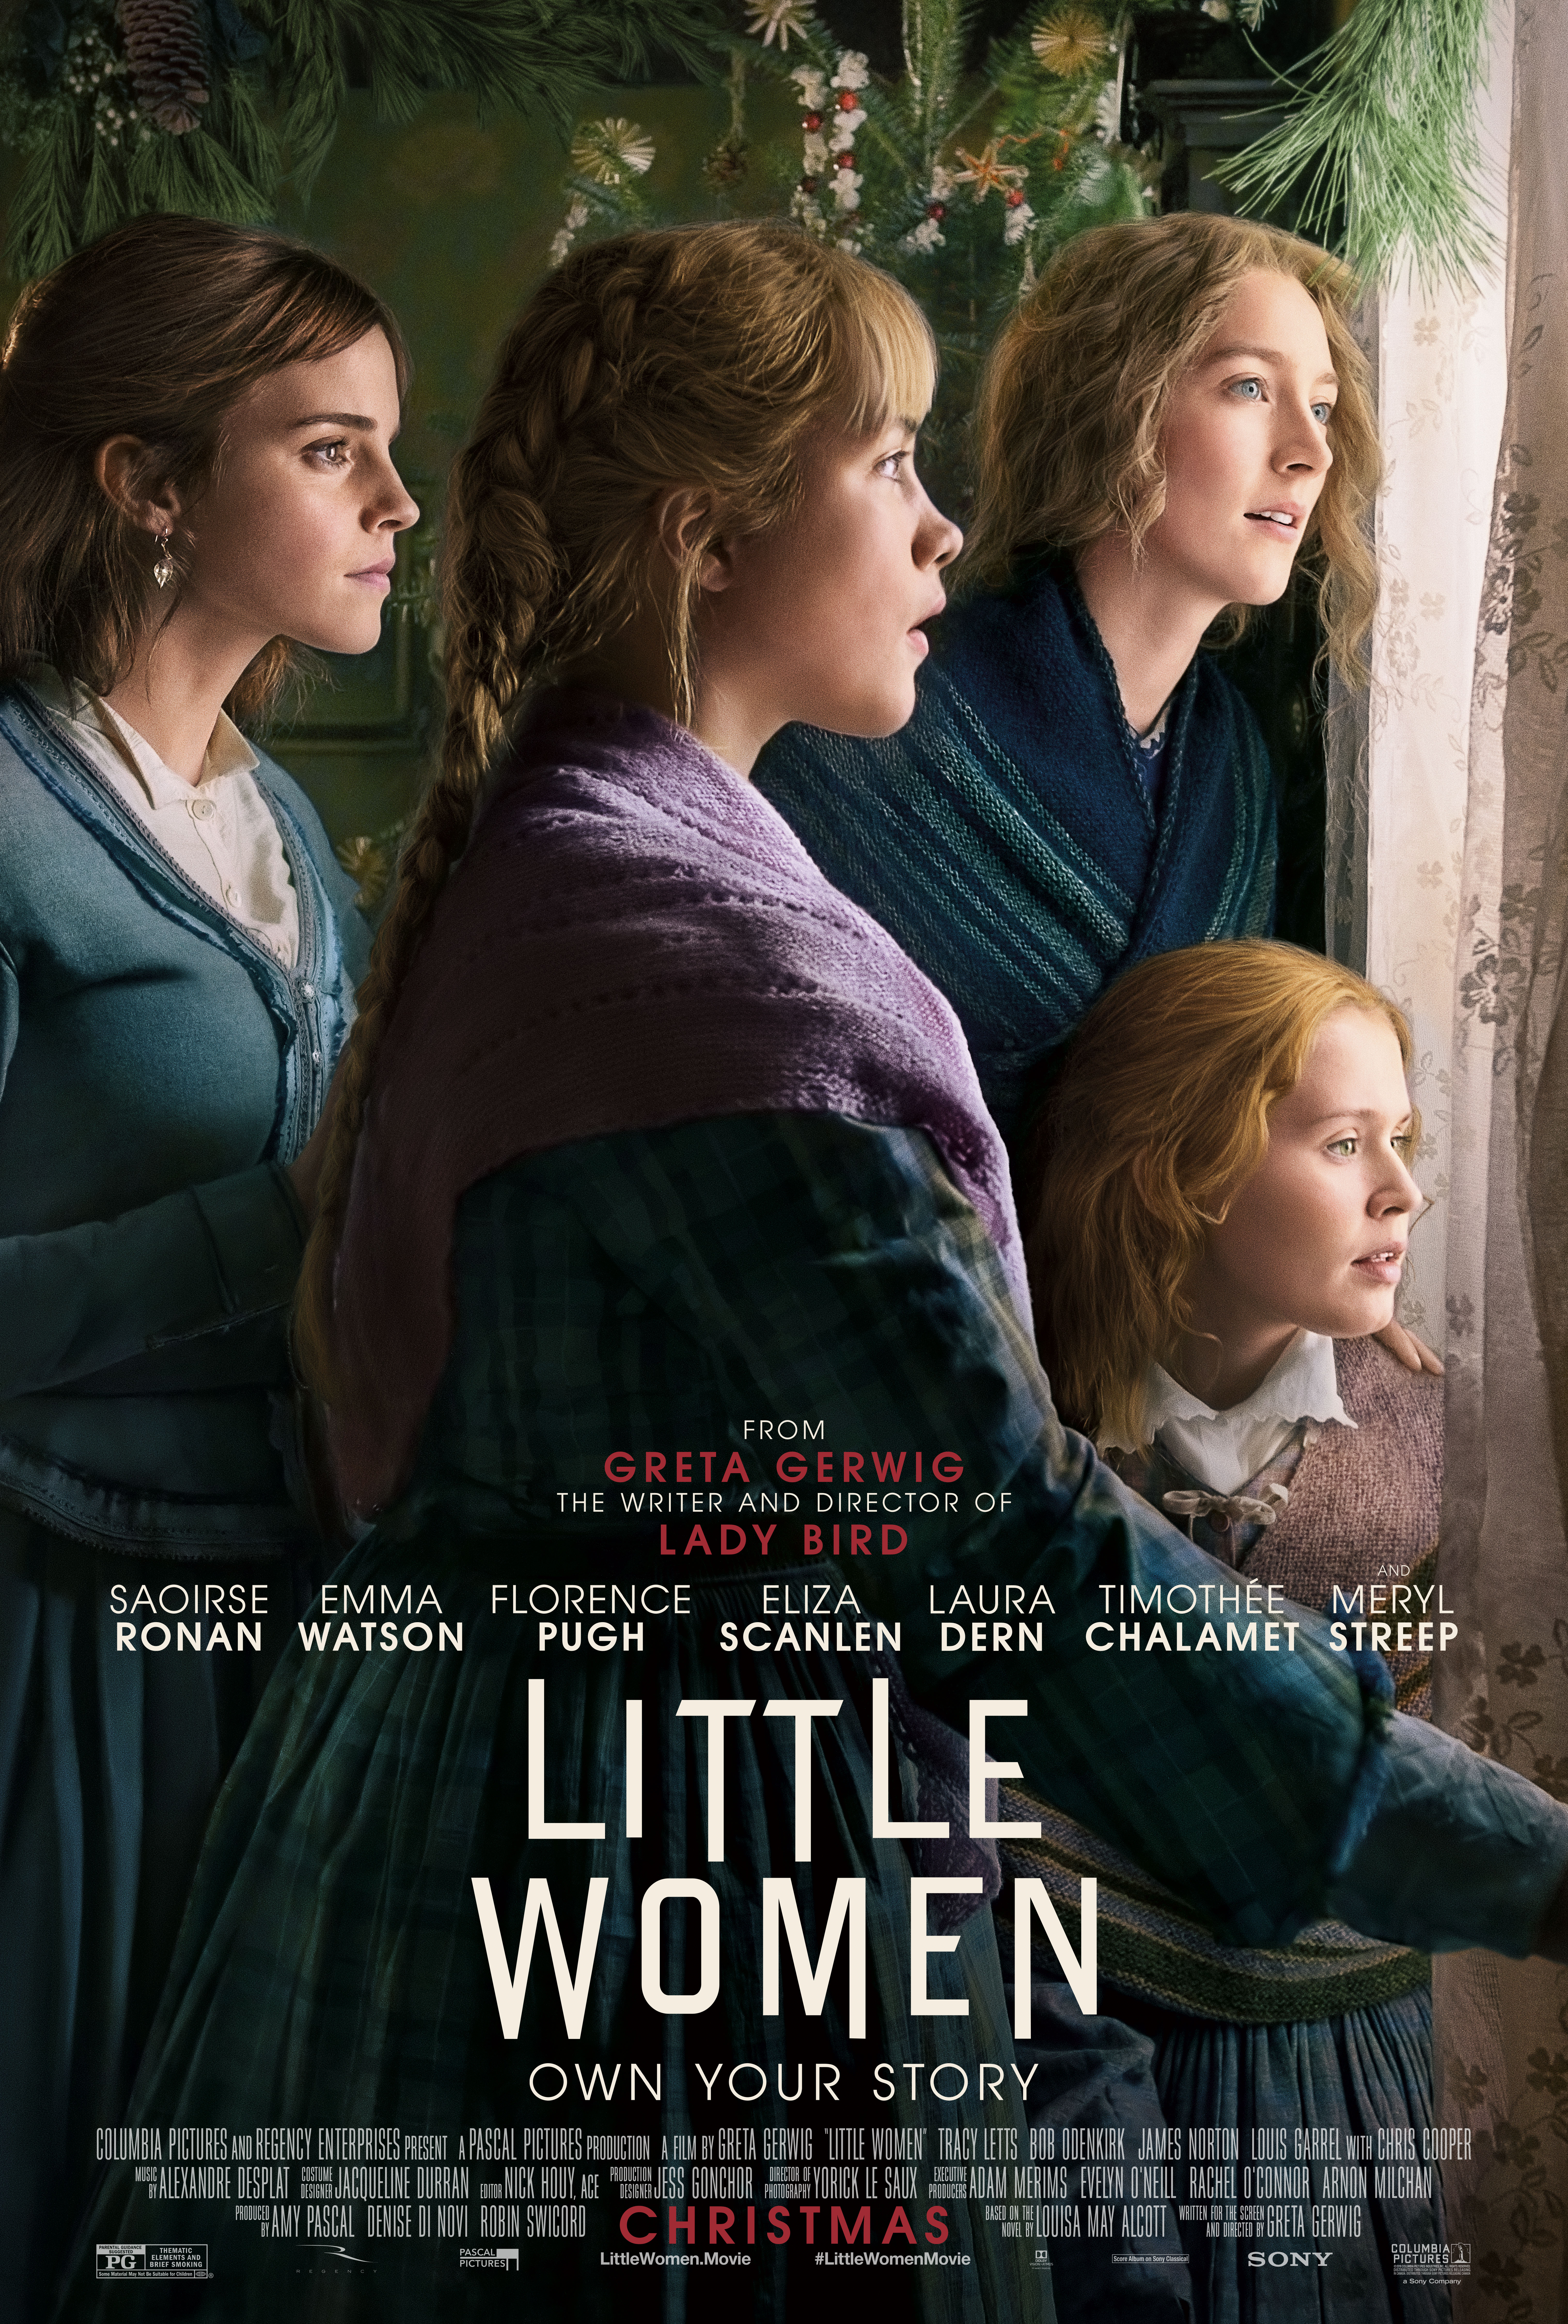 Little Women (2019) cottagecore movie